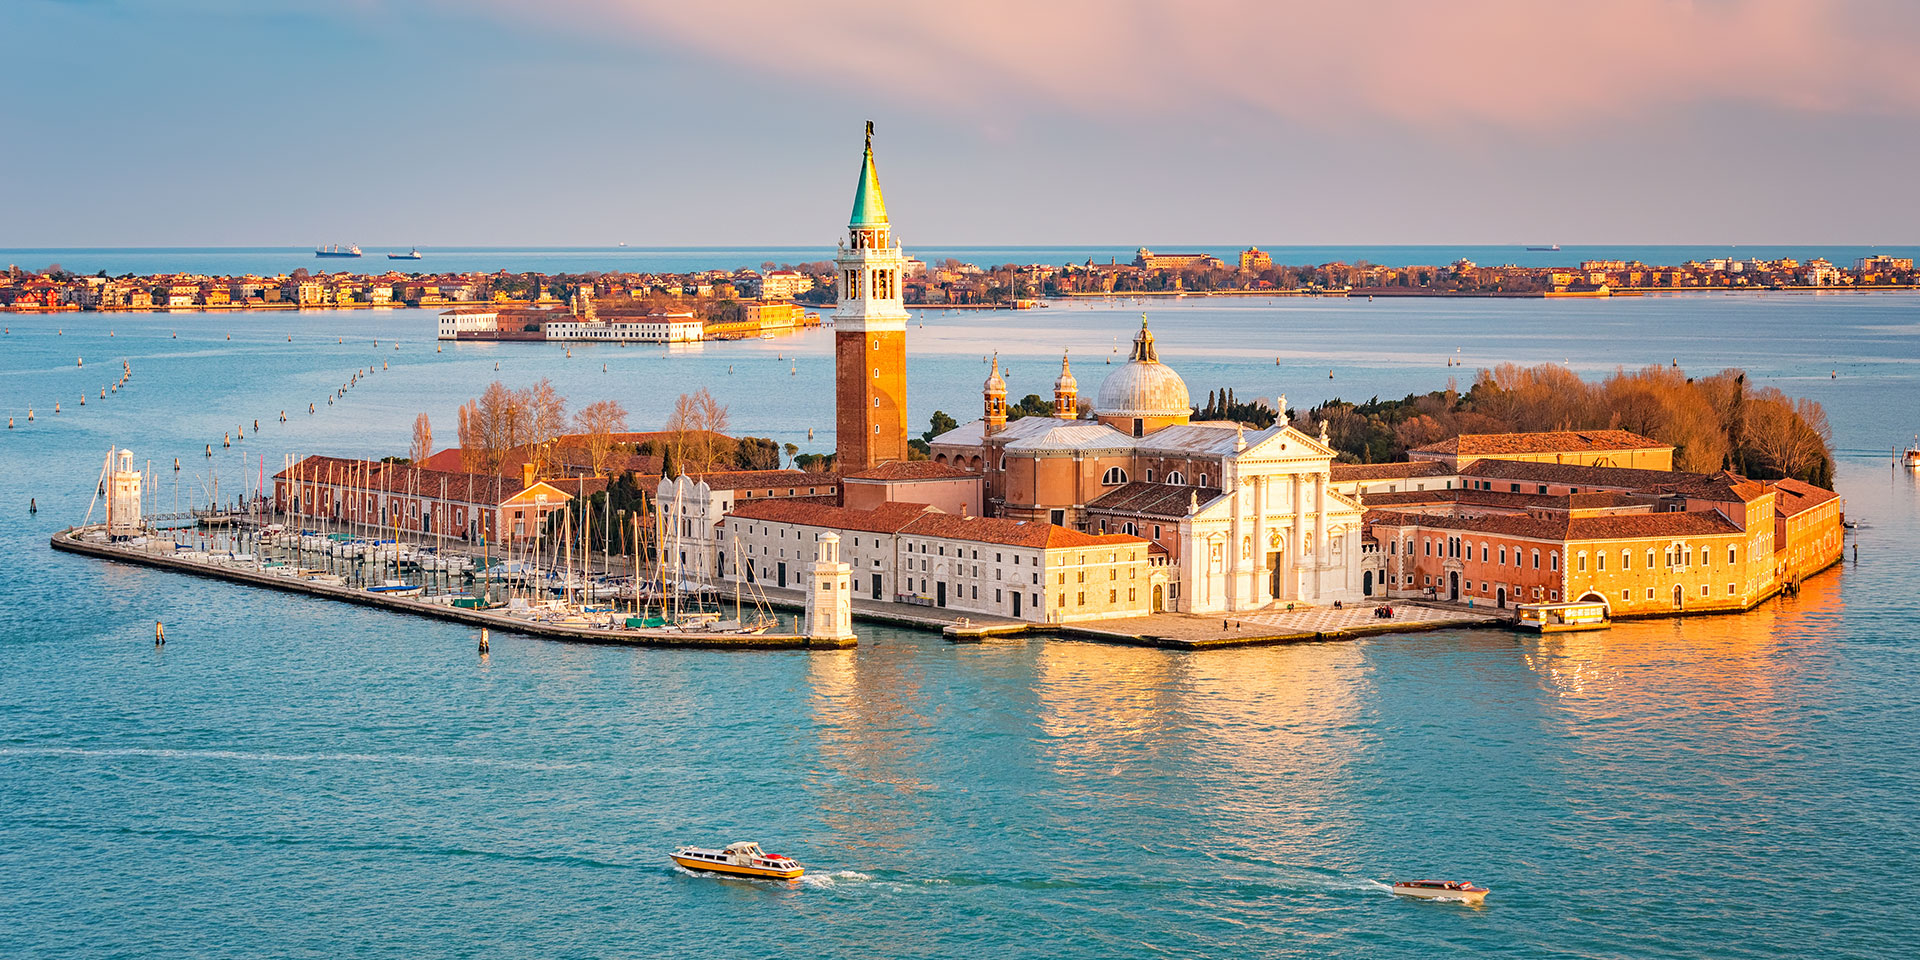 Andiamo! A Local’s Guide to Island Hopping in Venice